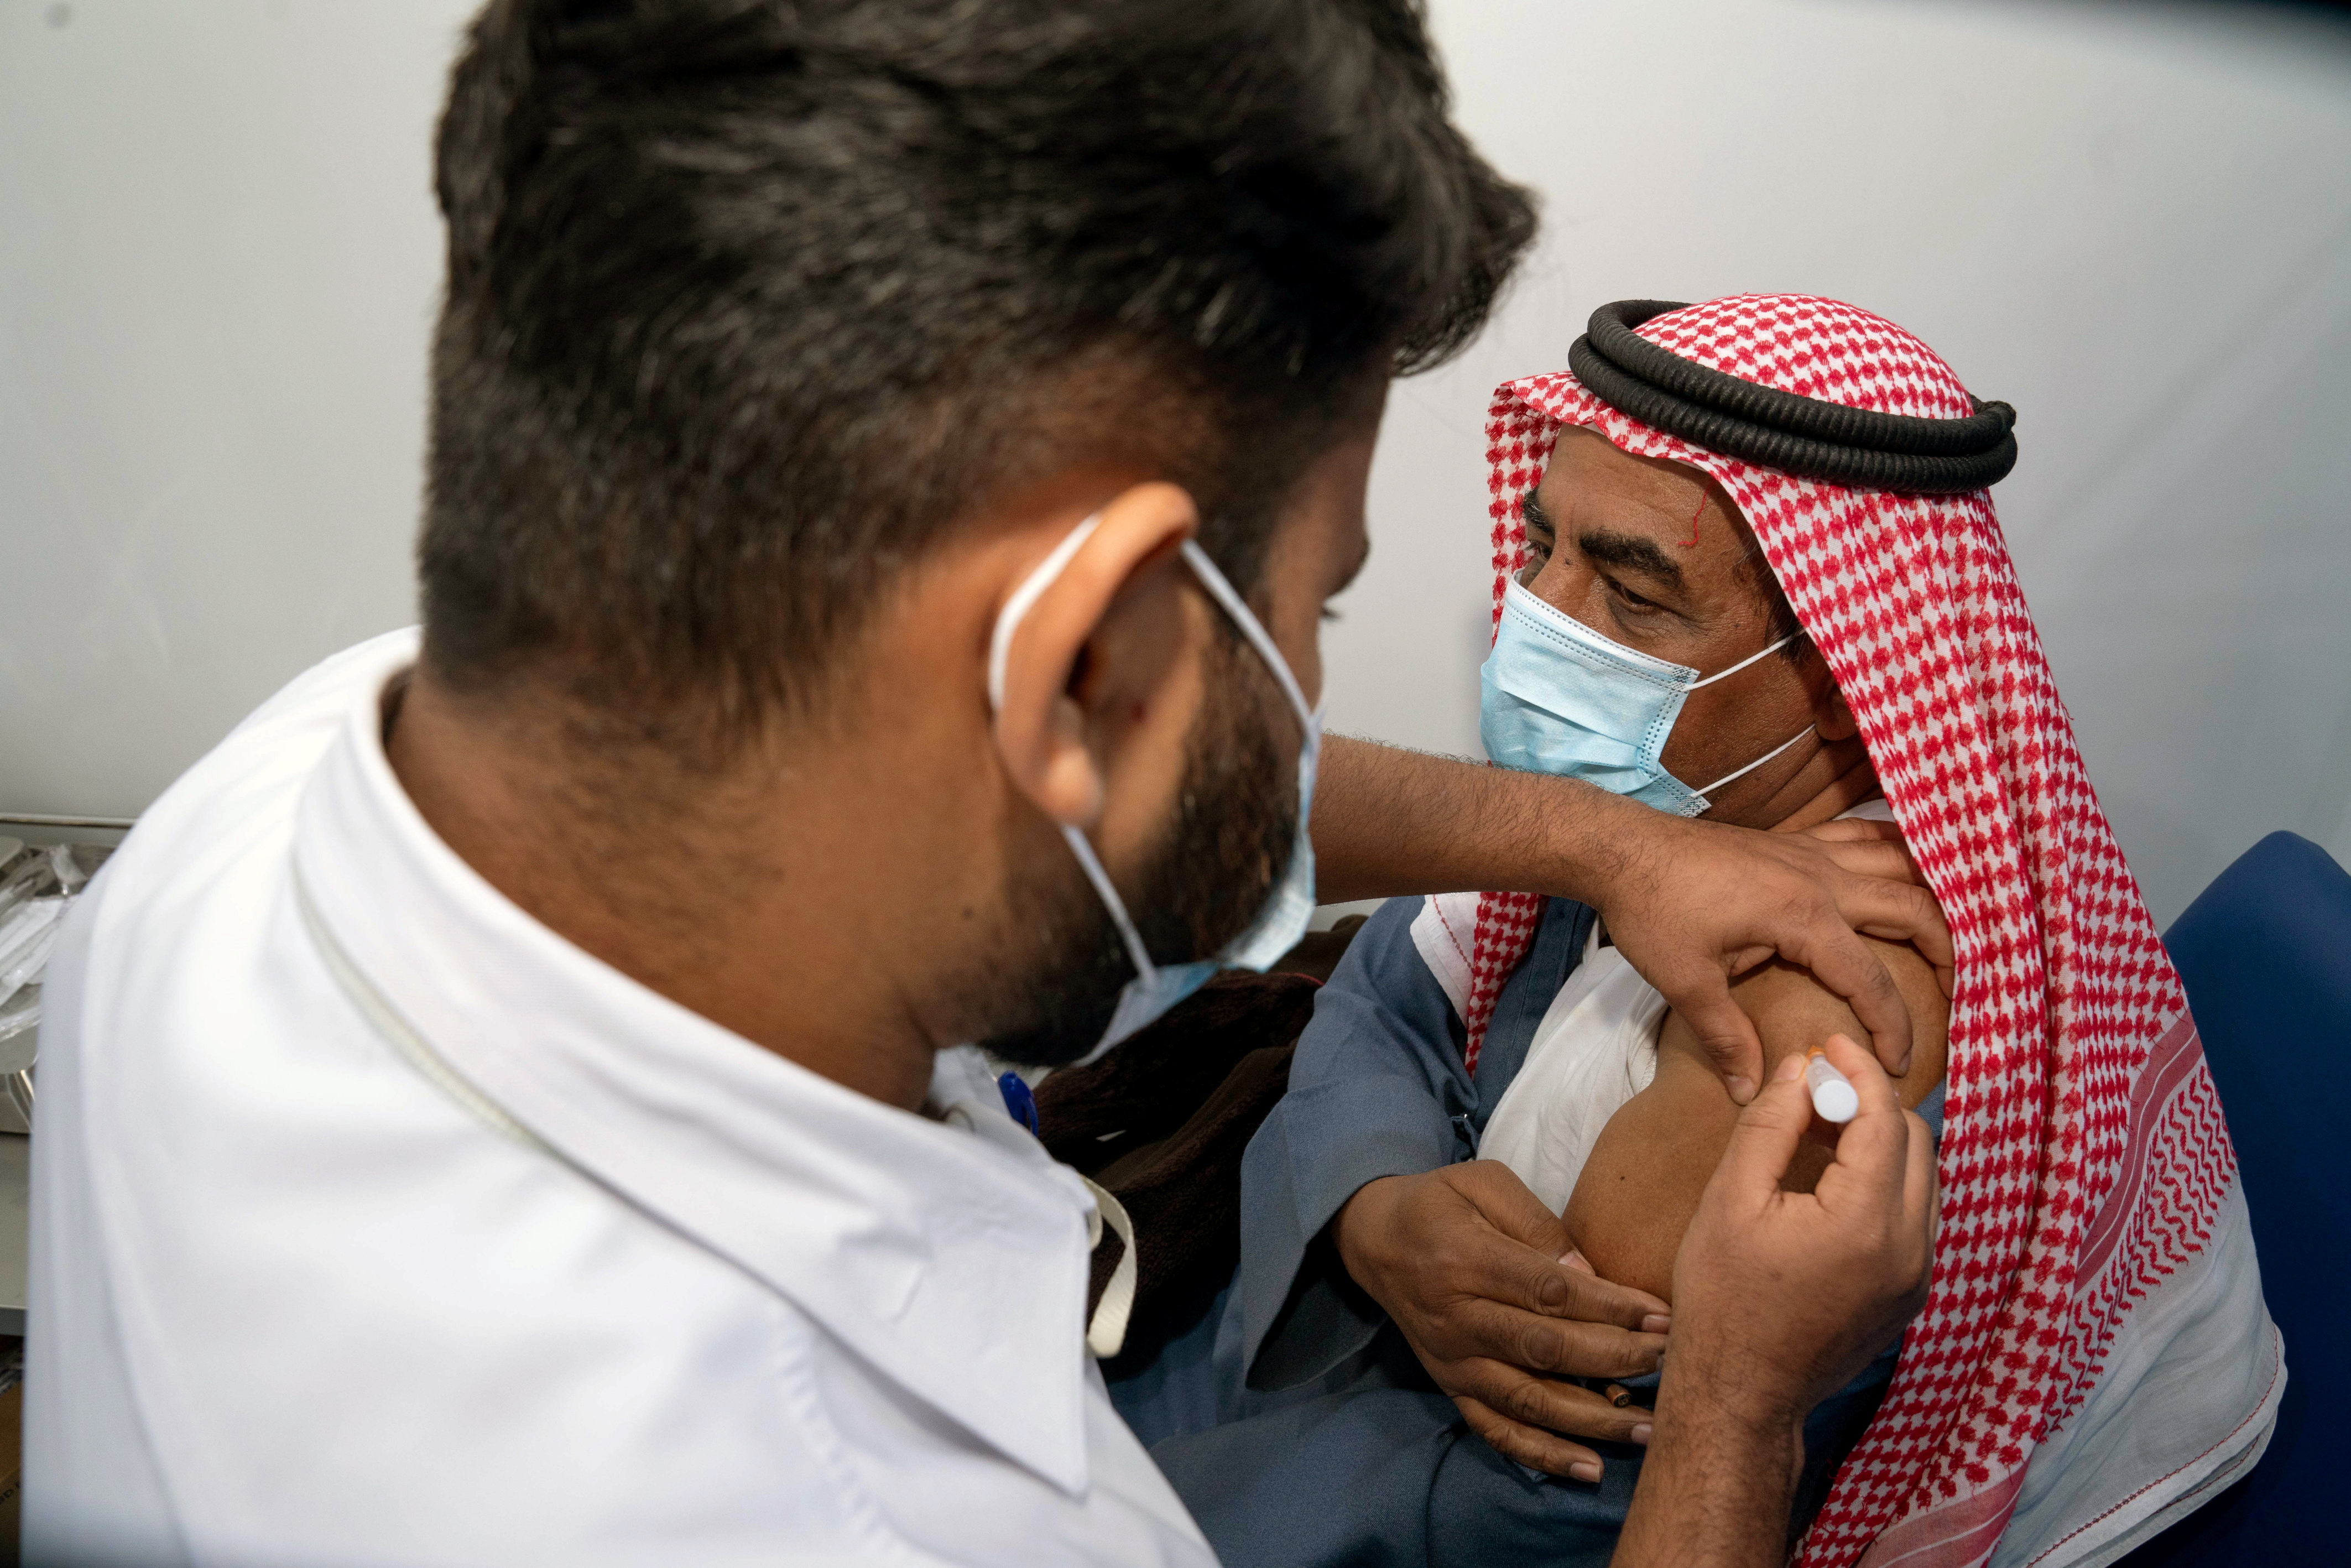 A Kuwai man, Abdulla al Anazi, gets a dose of a coronavirus disease (COVID-19) vaccine in Kuwait City